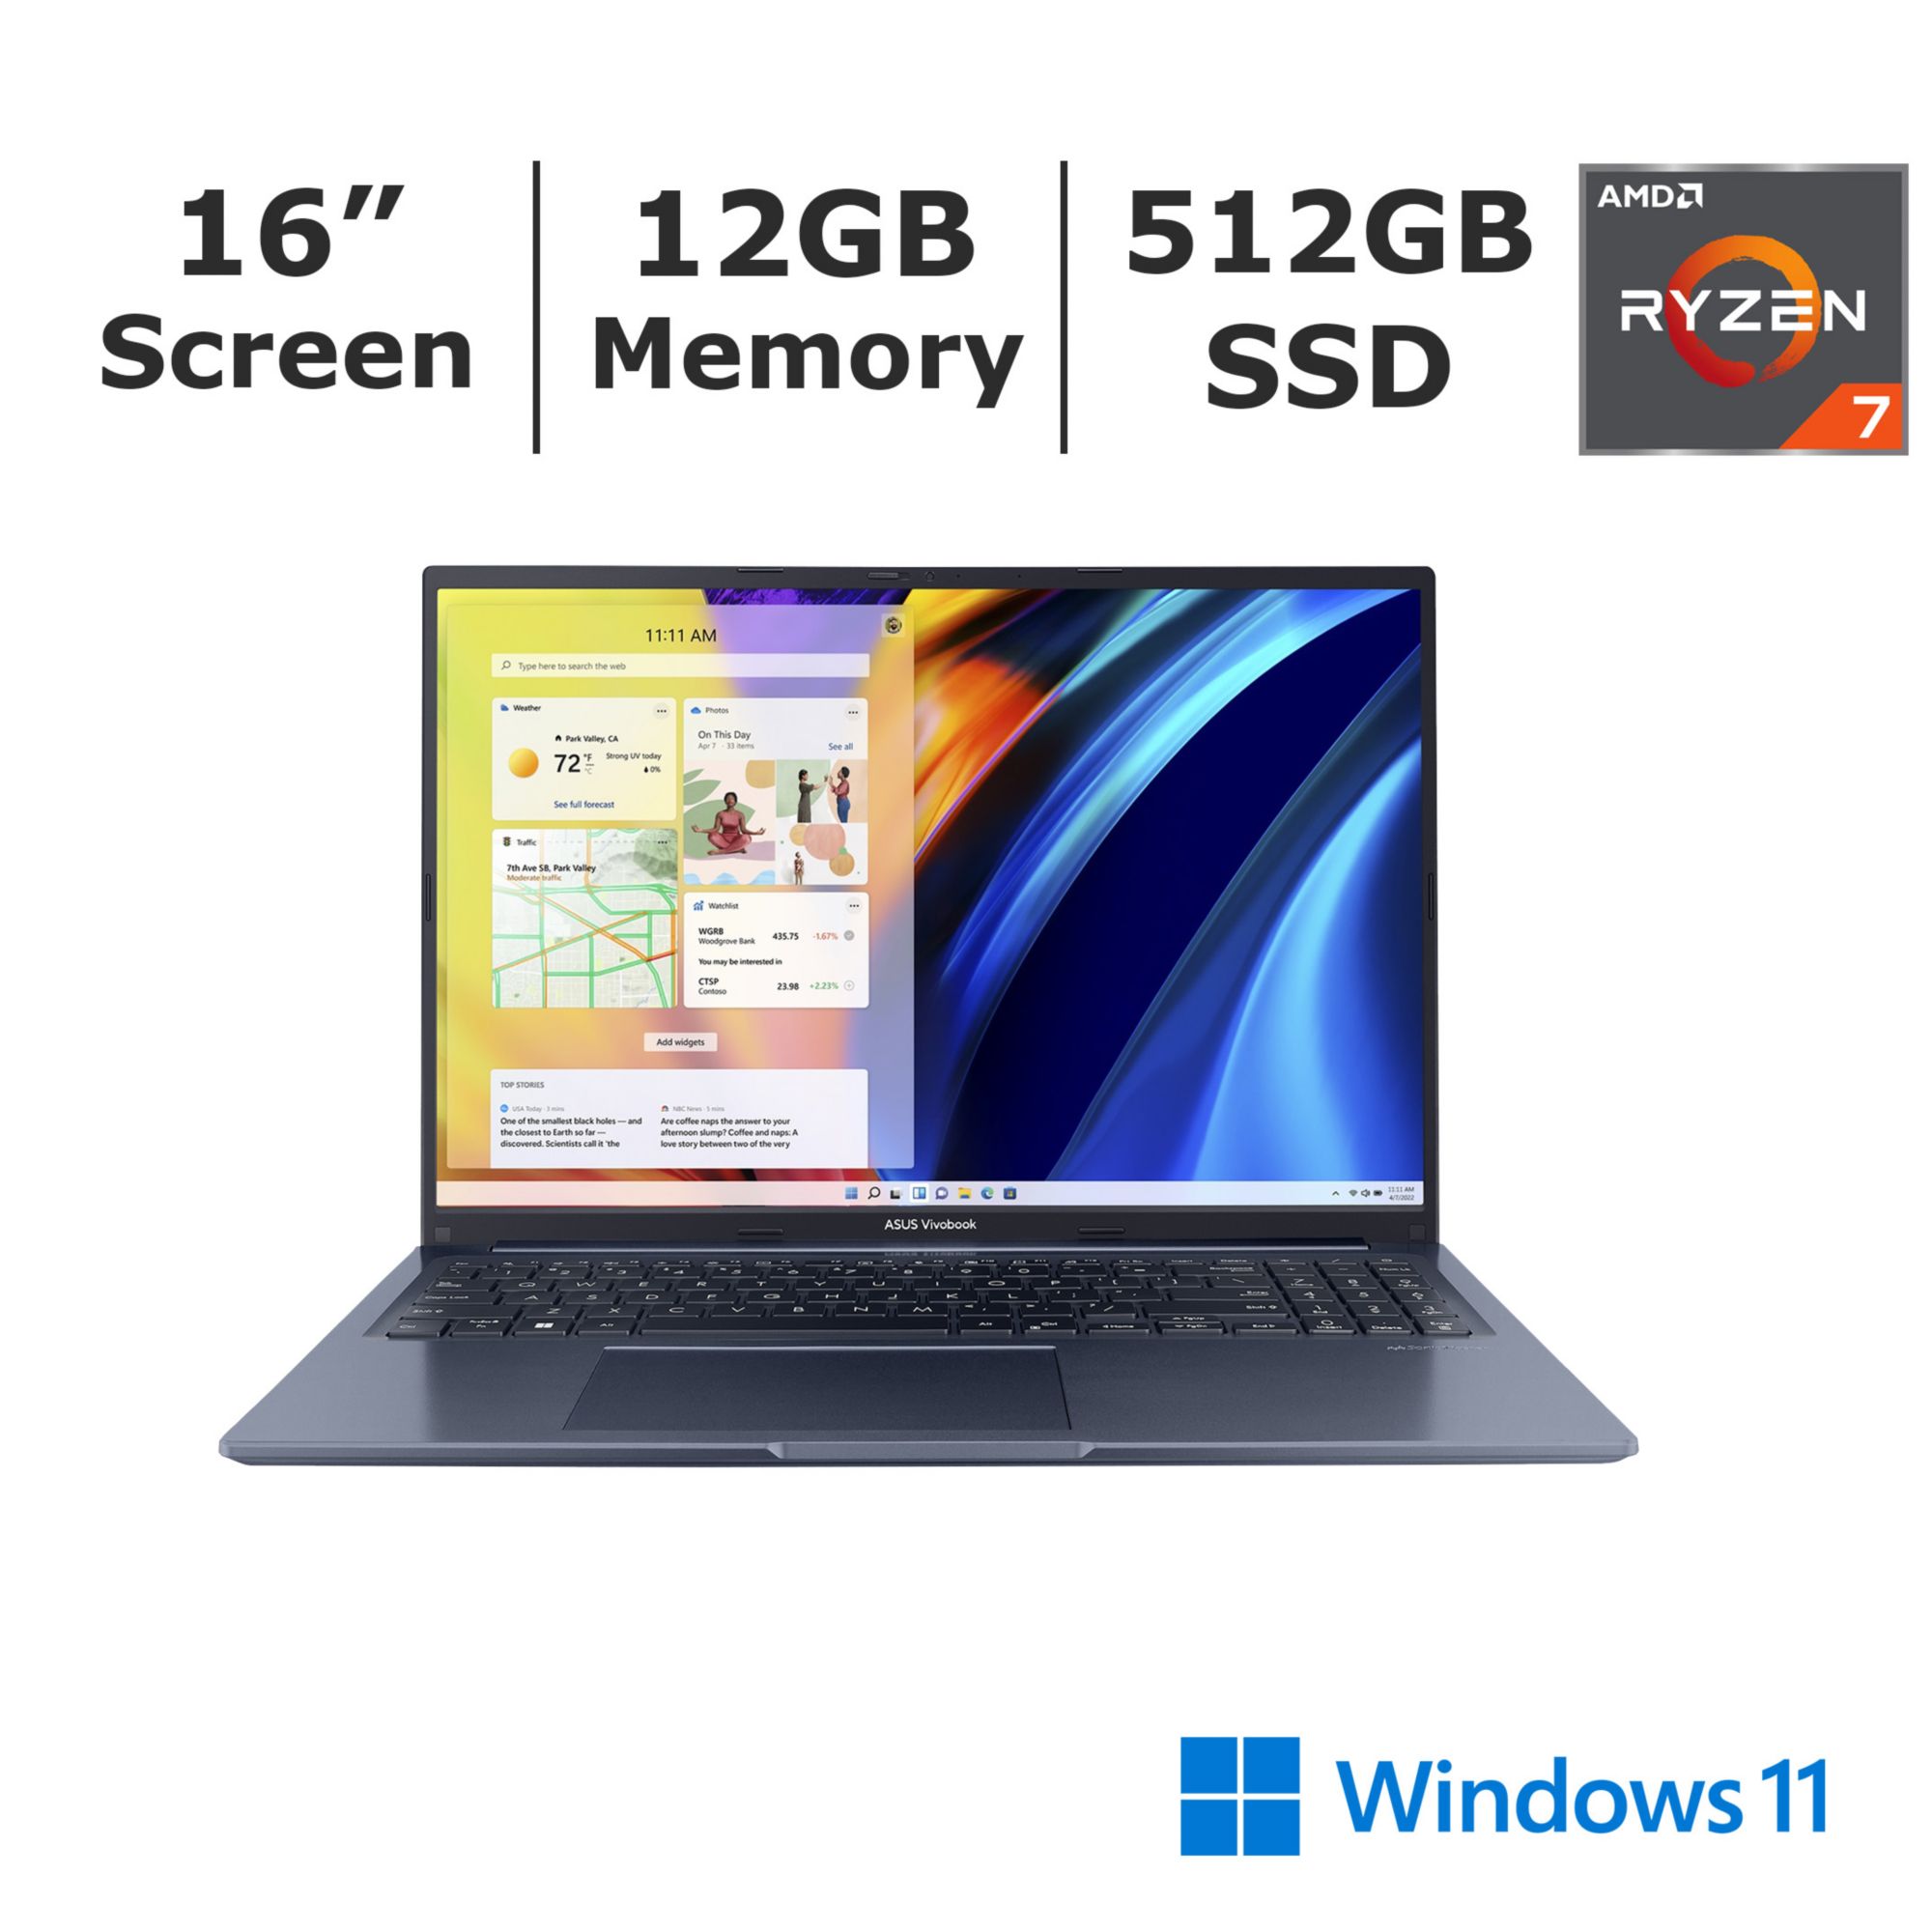 ASUS Vivobook 16&quot; Full HD Notebook, AMD Ryzen 7 Processor, 12GB Memory, 512GB SSD, AMD Radeon Vega 8 Graphics